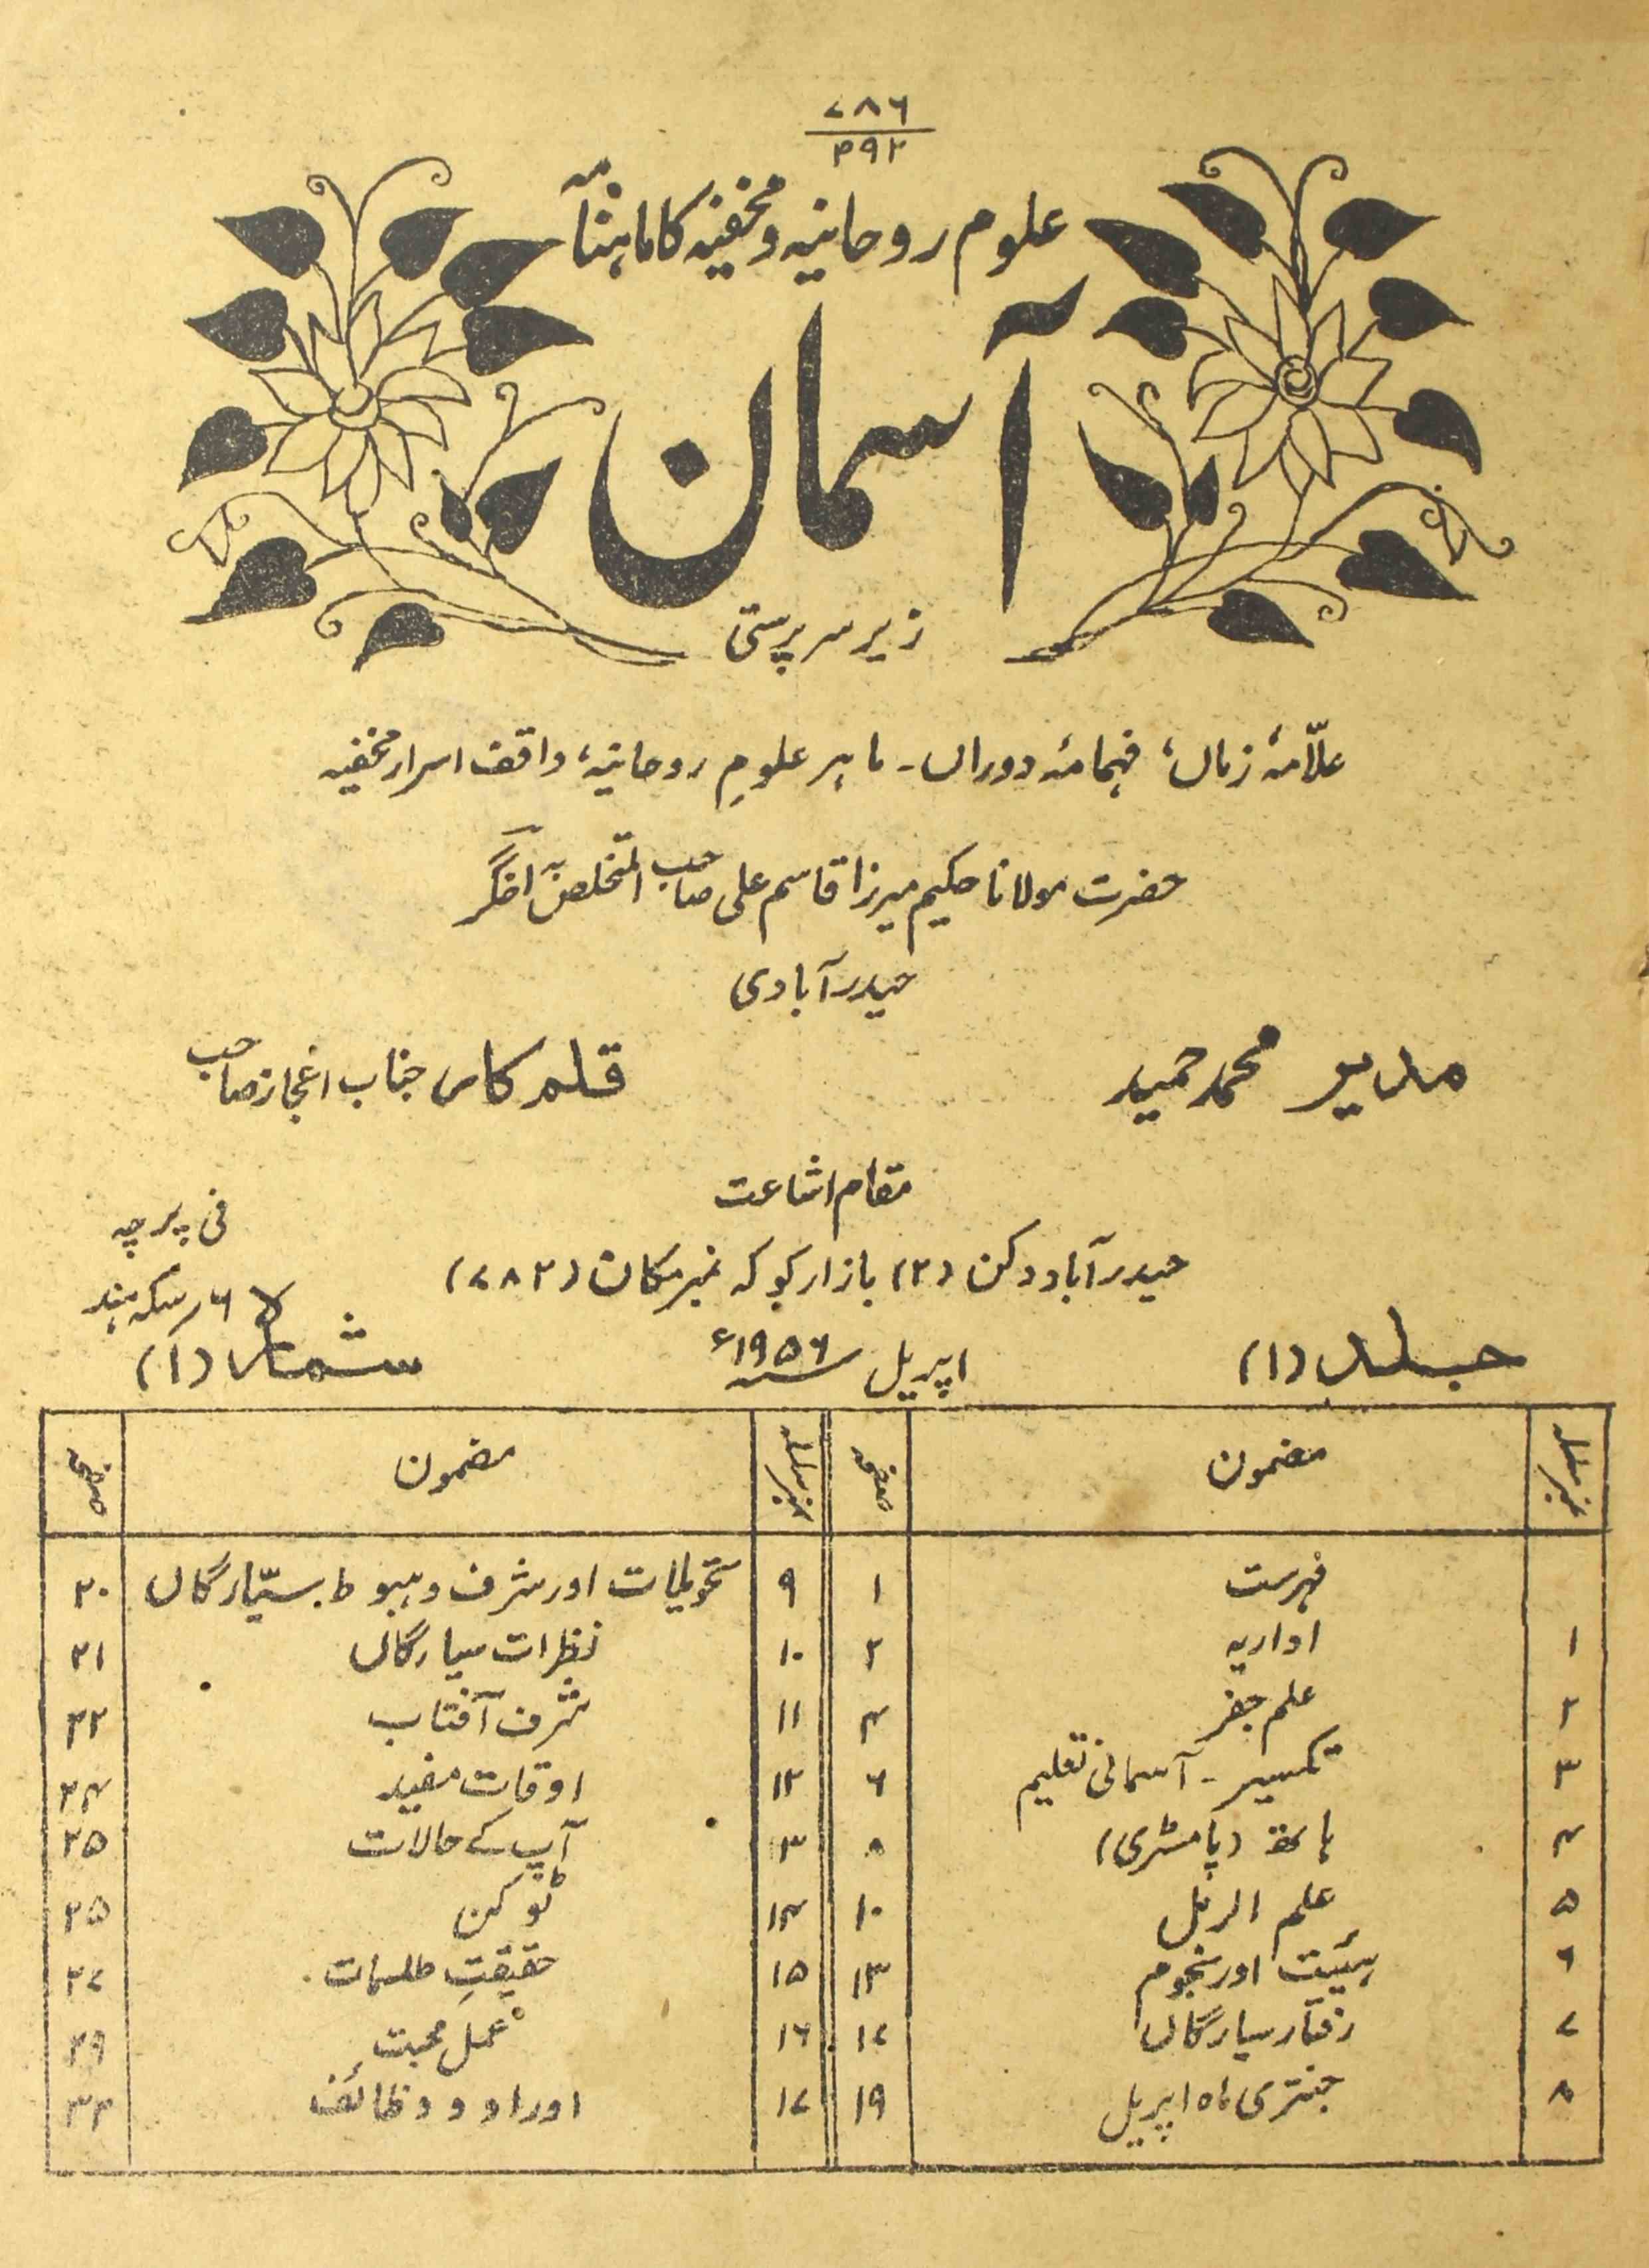 Asman Jild 1 No 1 April 1956